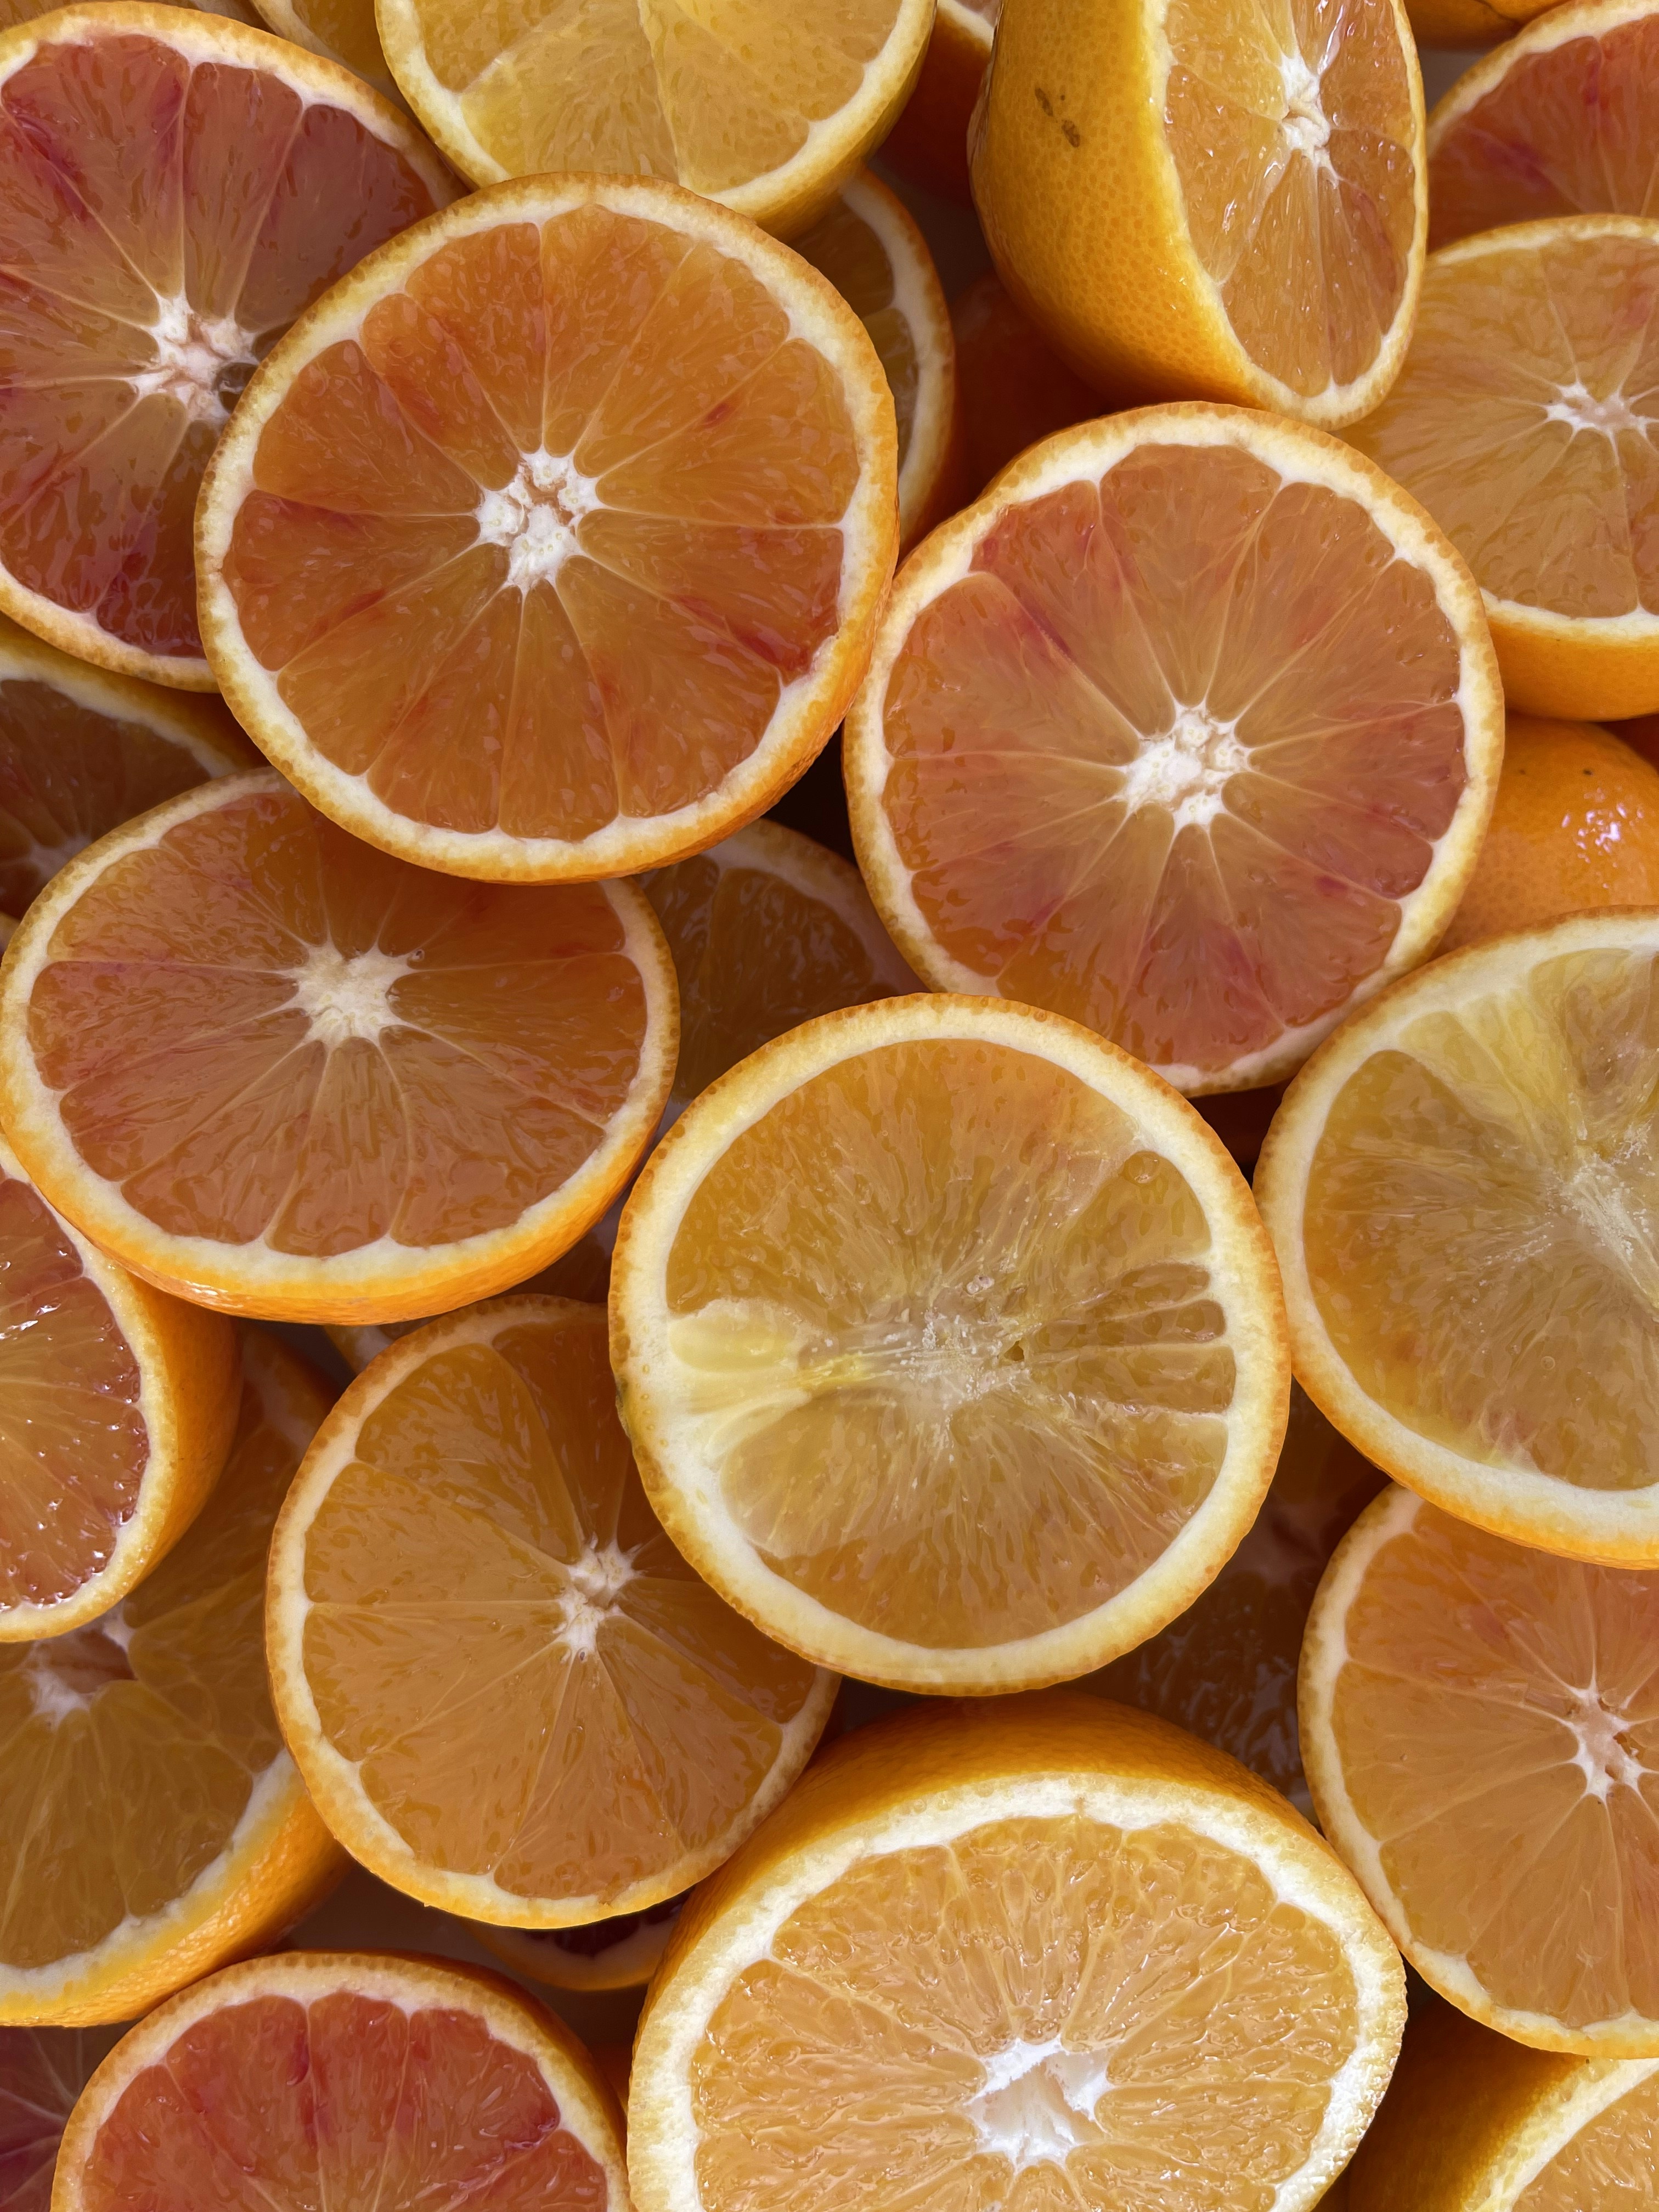 Preparing oranges for juicing, Malaga, January ‘22